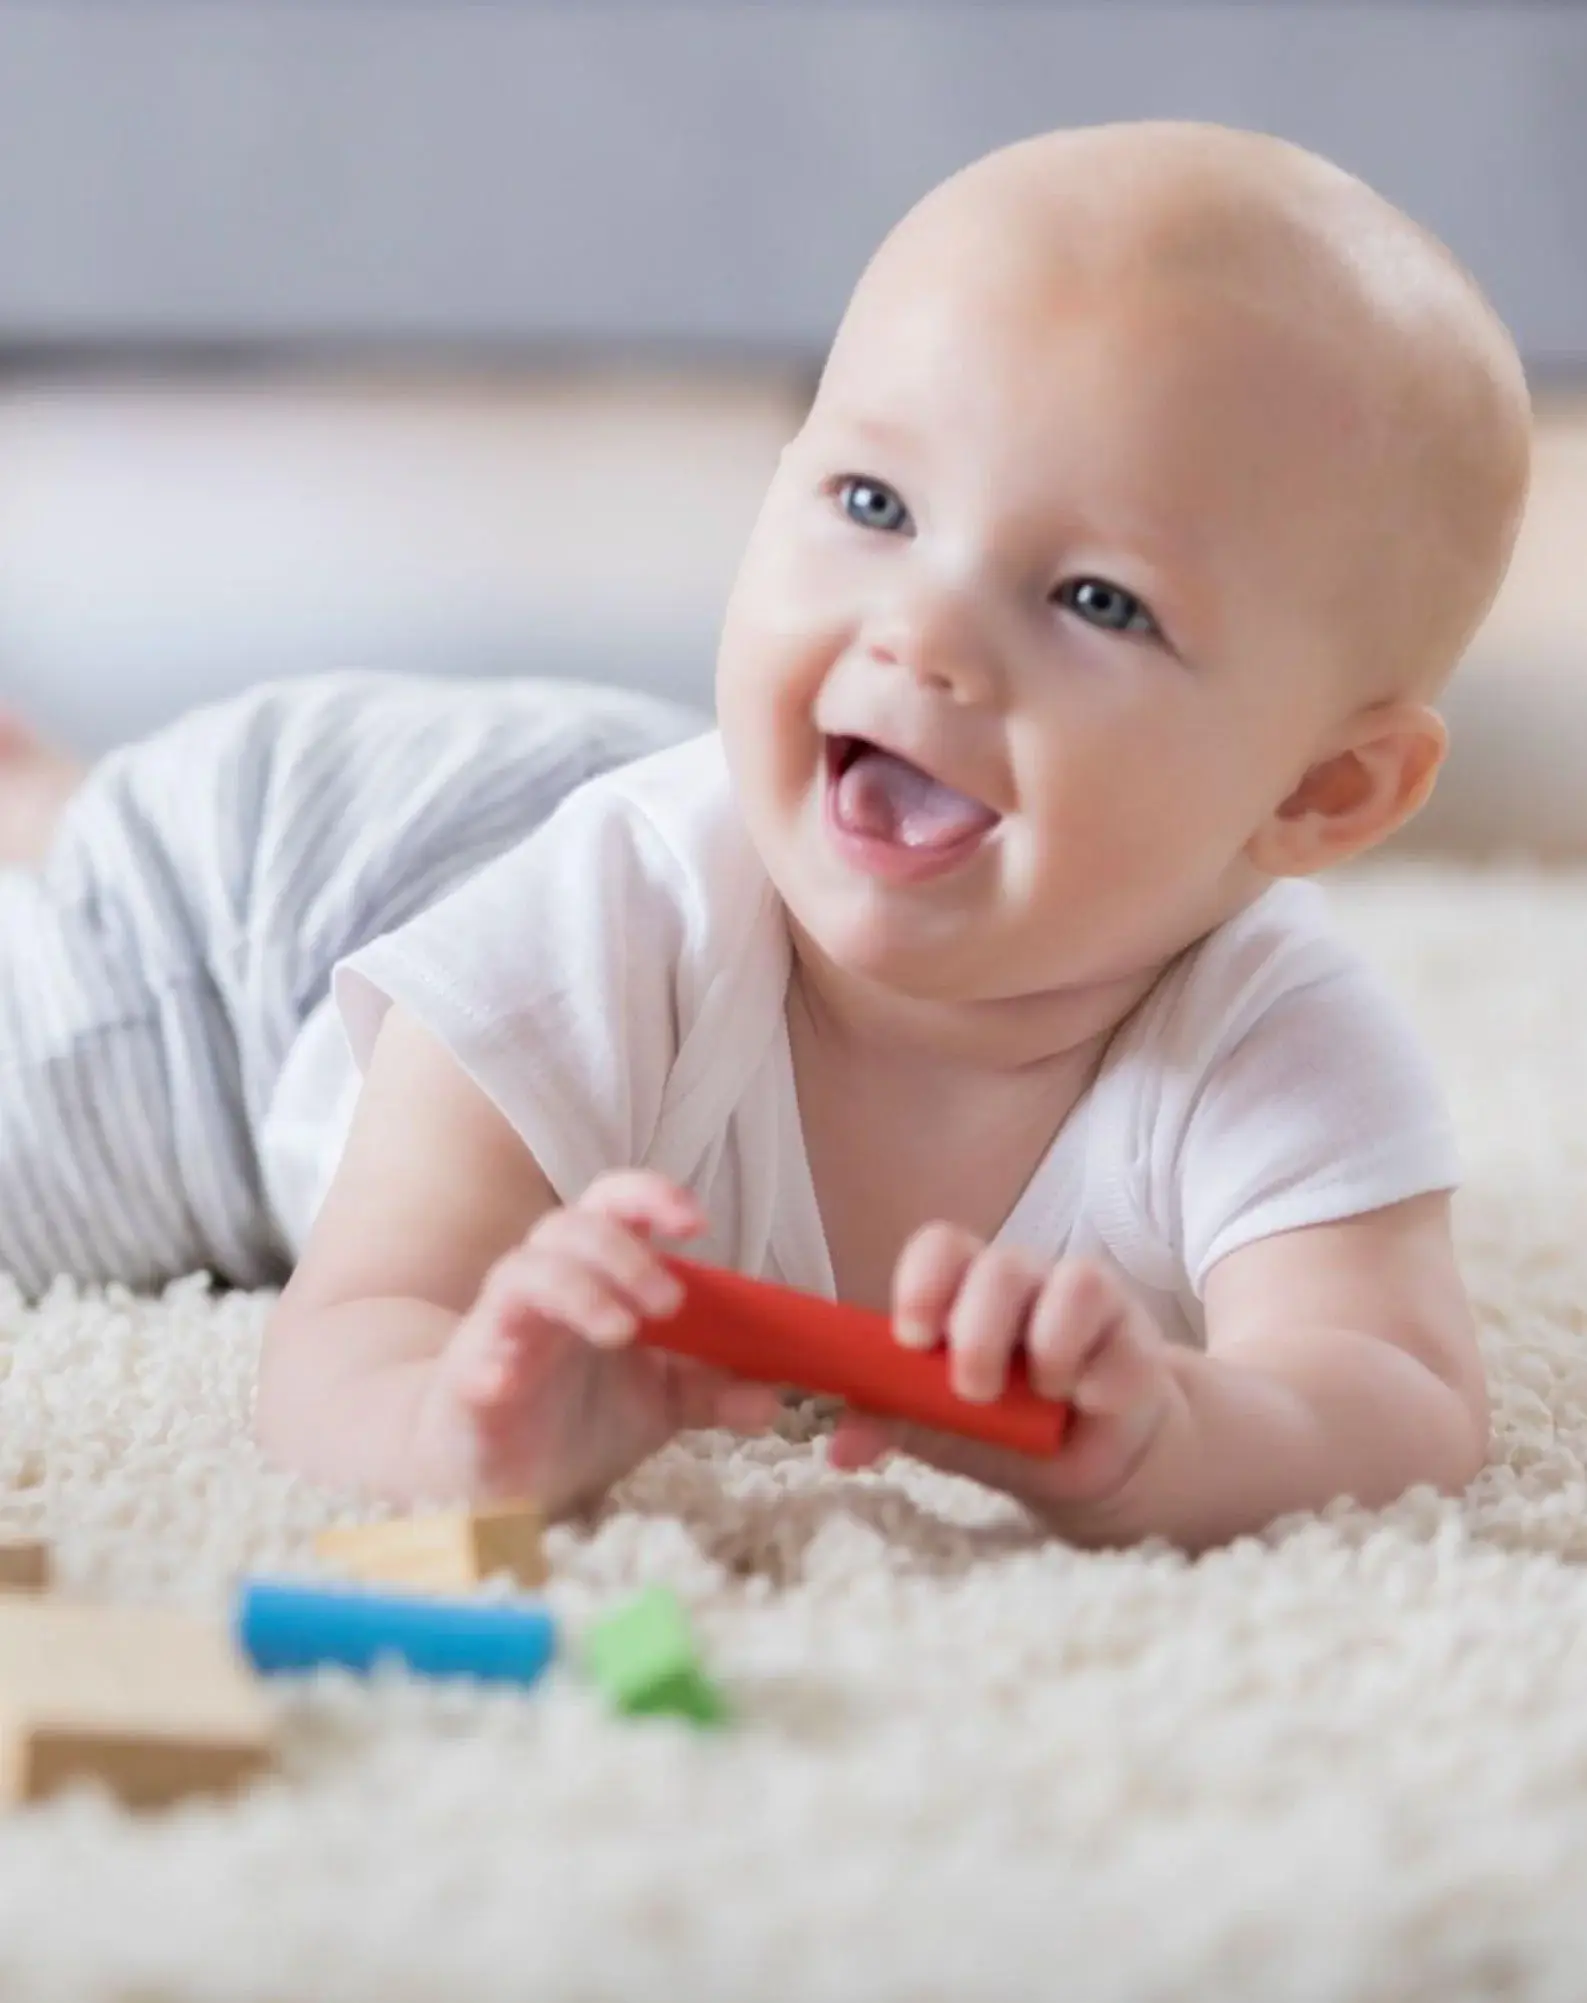 safe carpet for baby